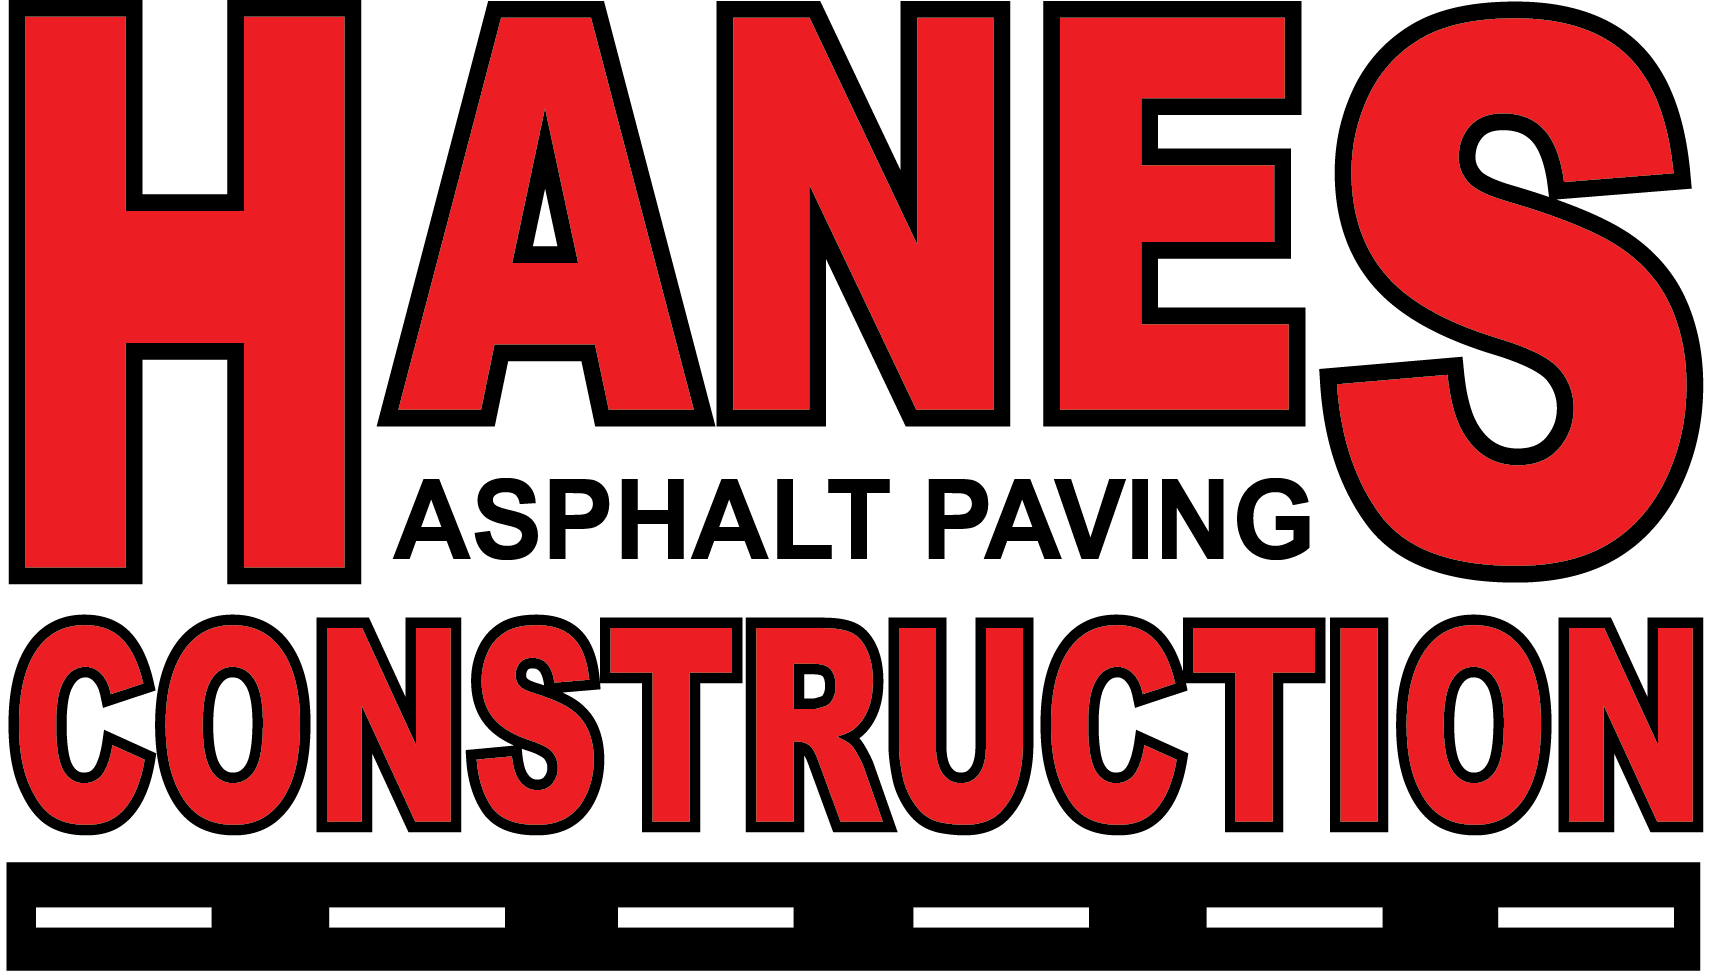 Hanes Asphalt Paving Construction